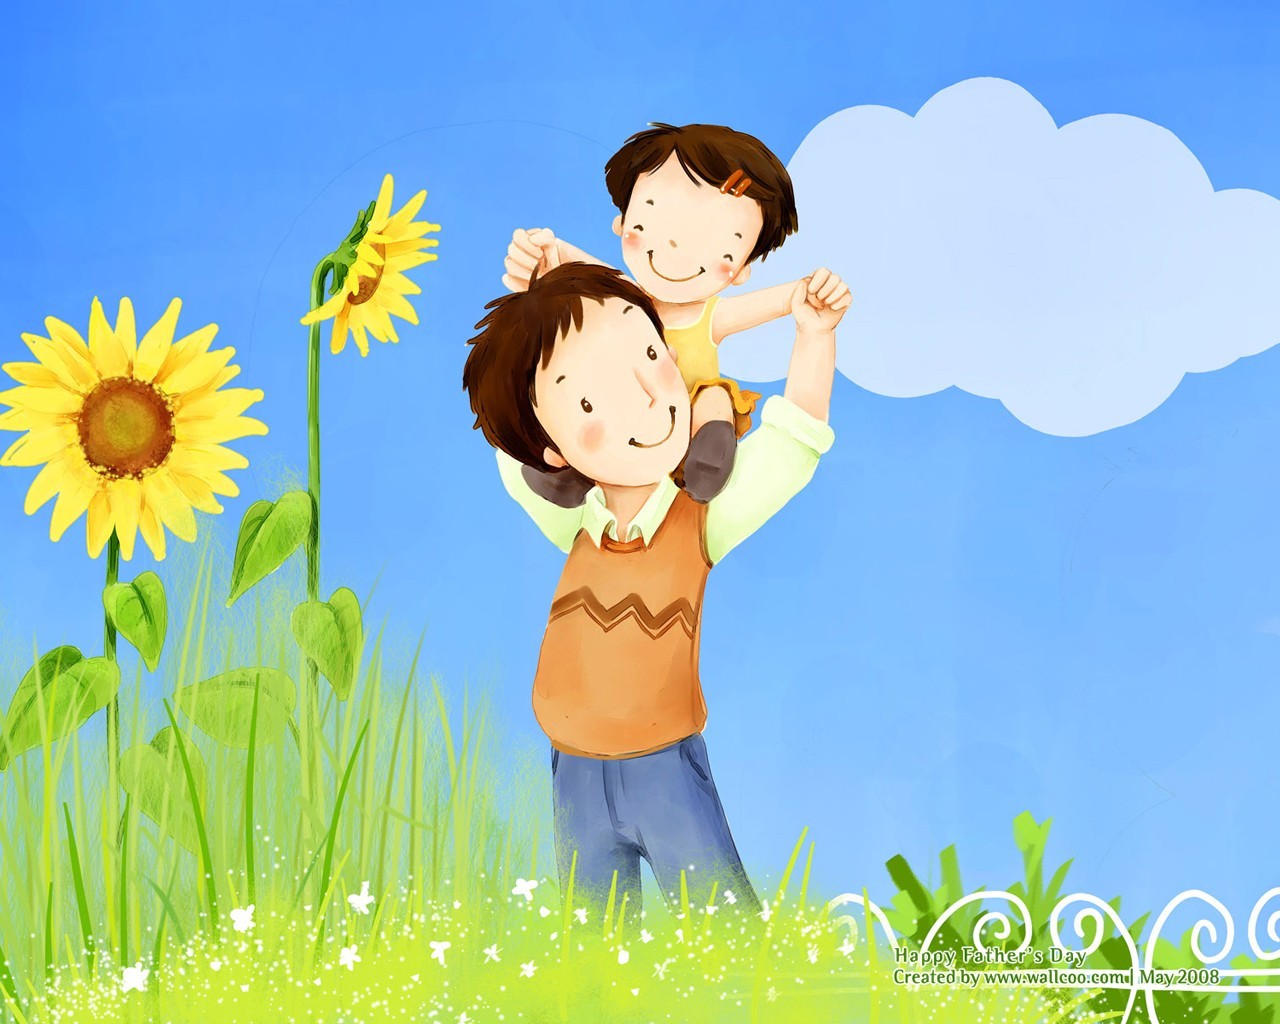 Father's Day theme of South Korean illustrator wallpaper #11 - 1280x1024